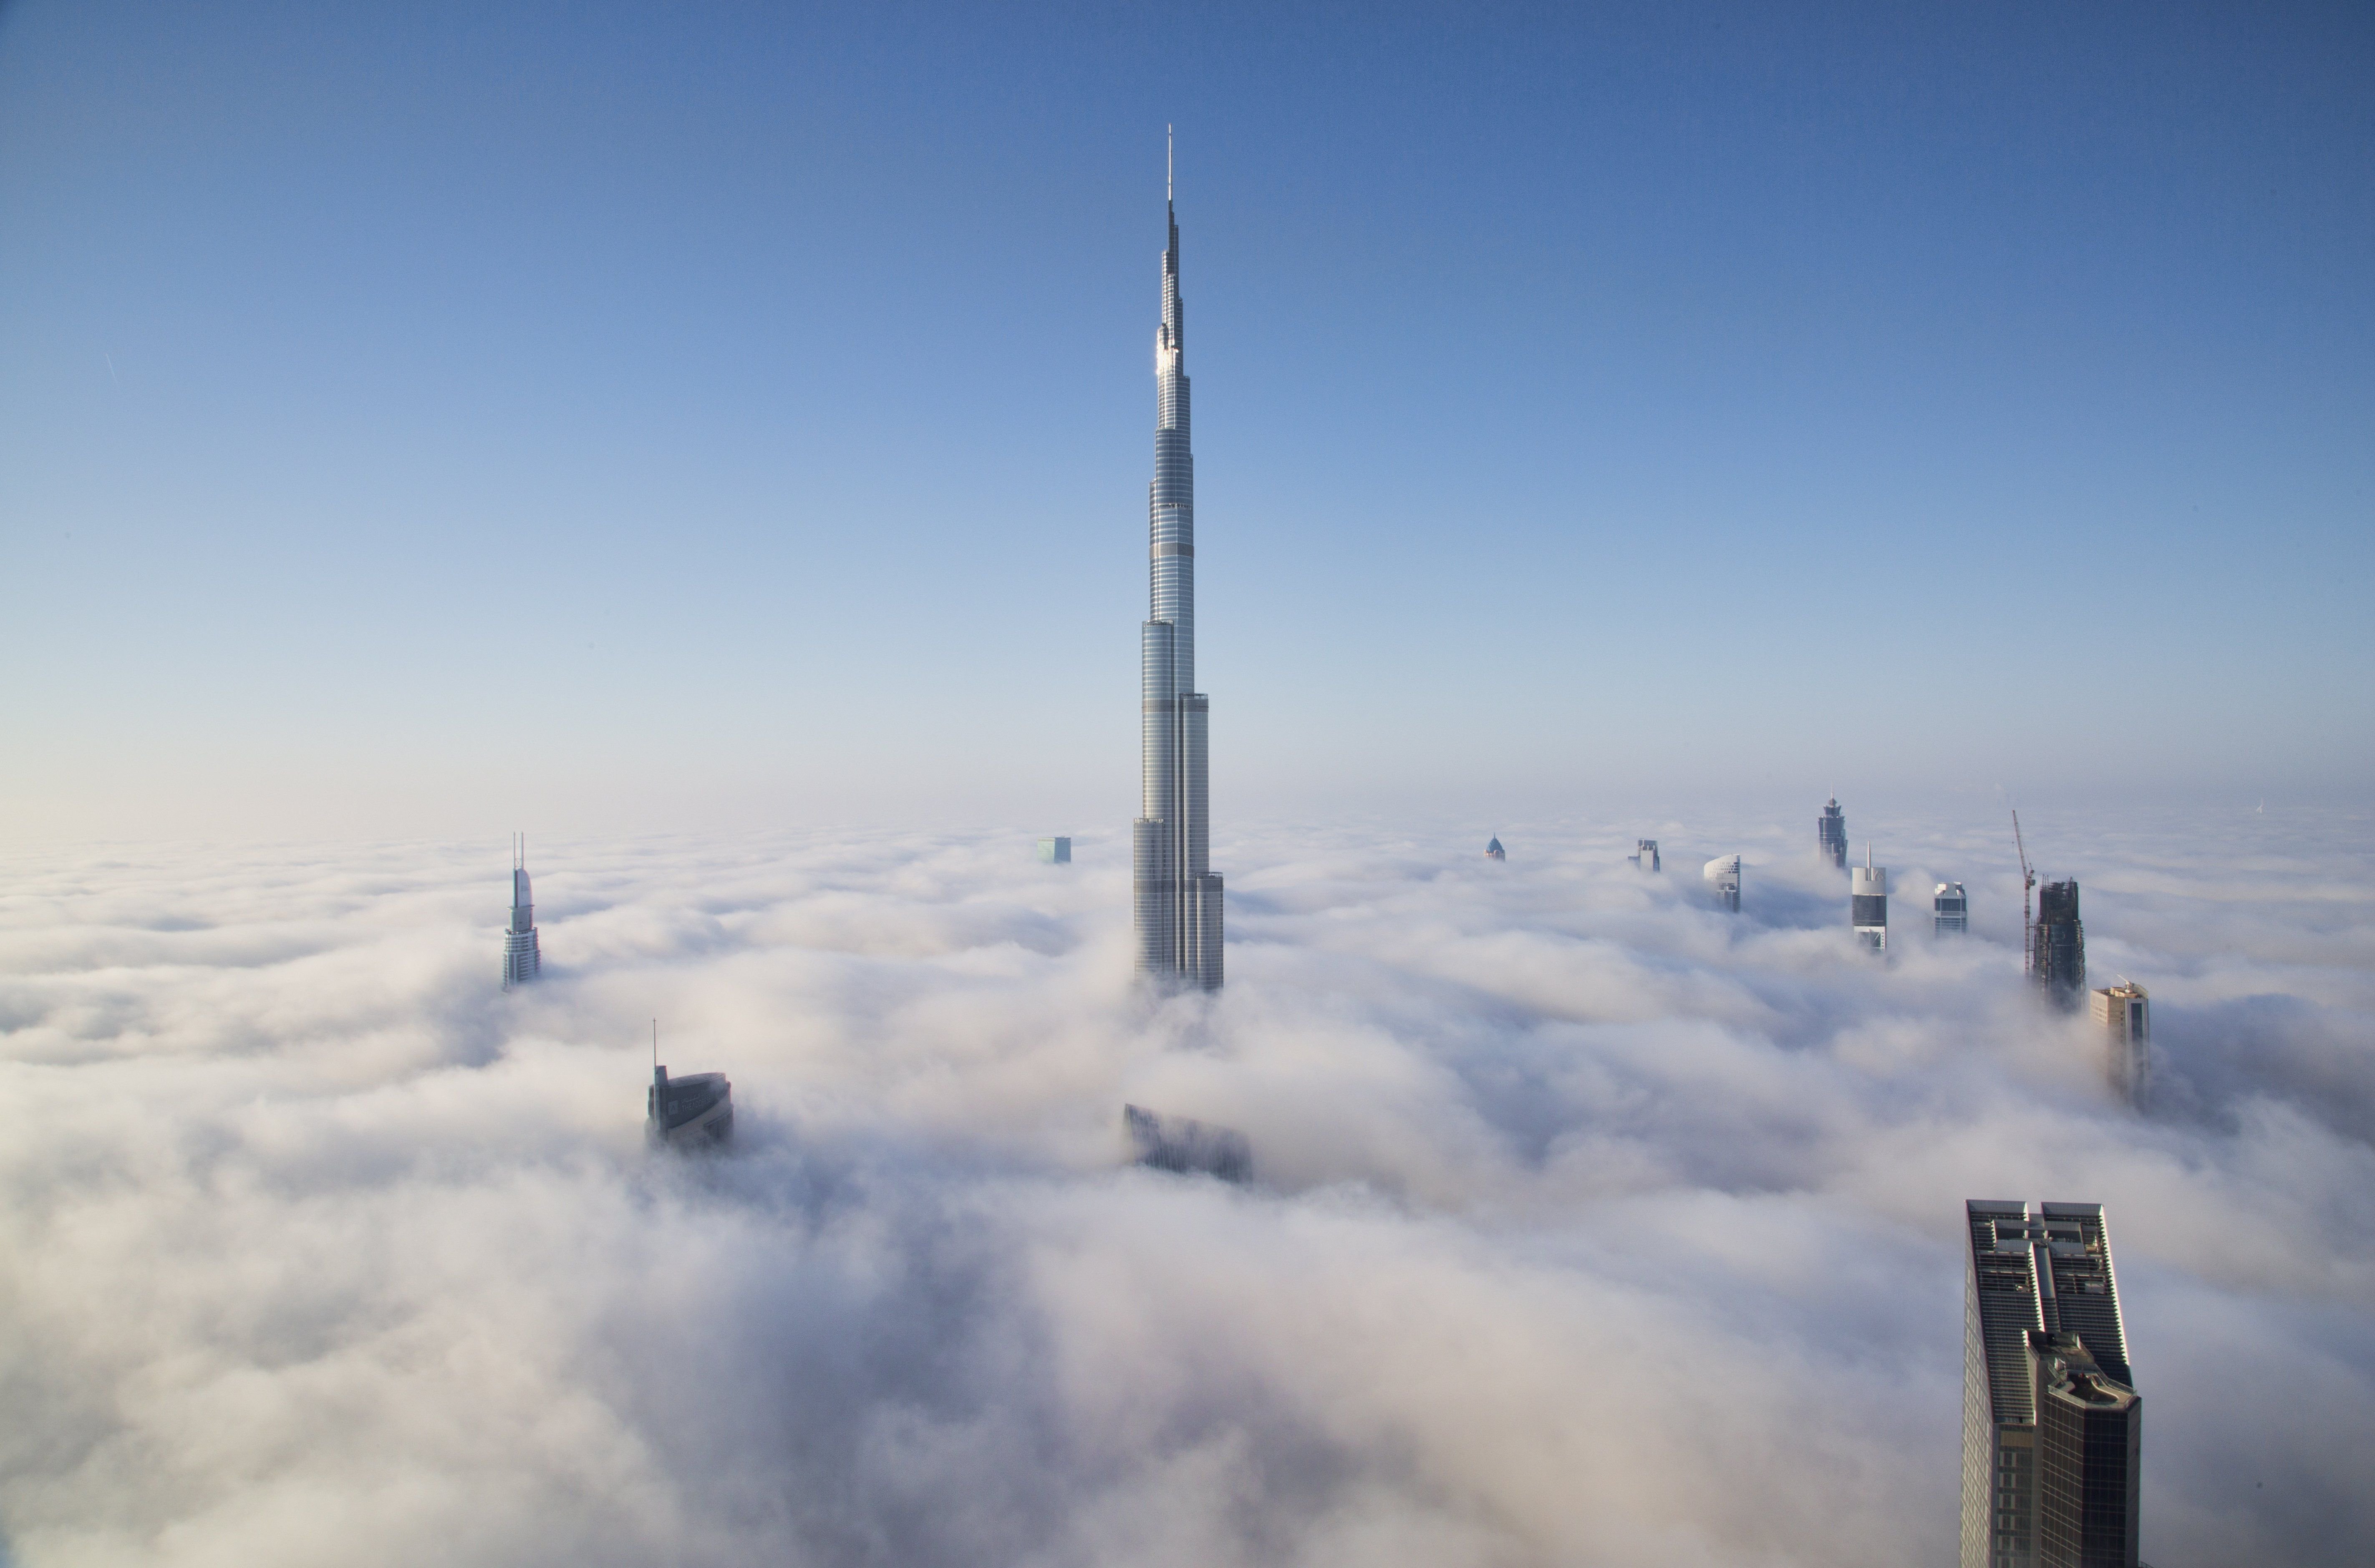 Башня халифа в дубае высота. Башня Бурдж Халифа в Дубае. Высота небоскреба Бурдж Халифа. Дубай башня Бурдж Халифа высота. Бурдж Халифа – 828 метров.